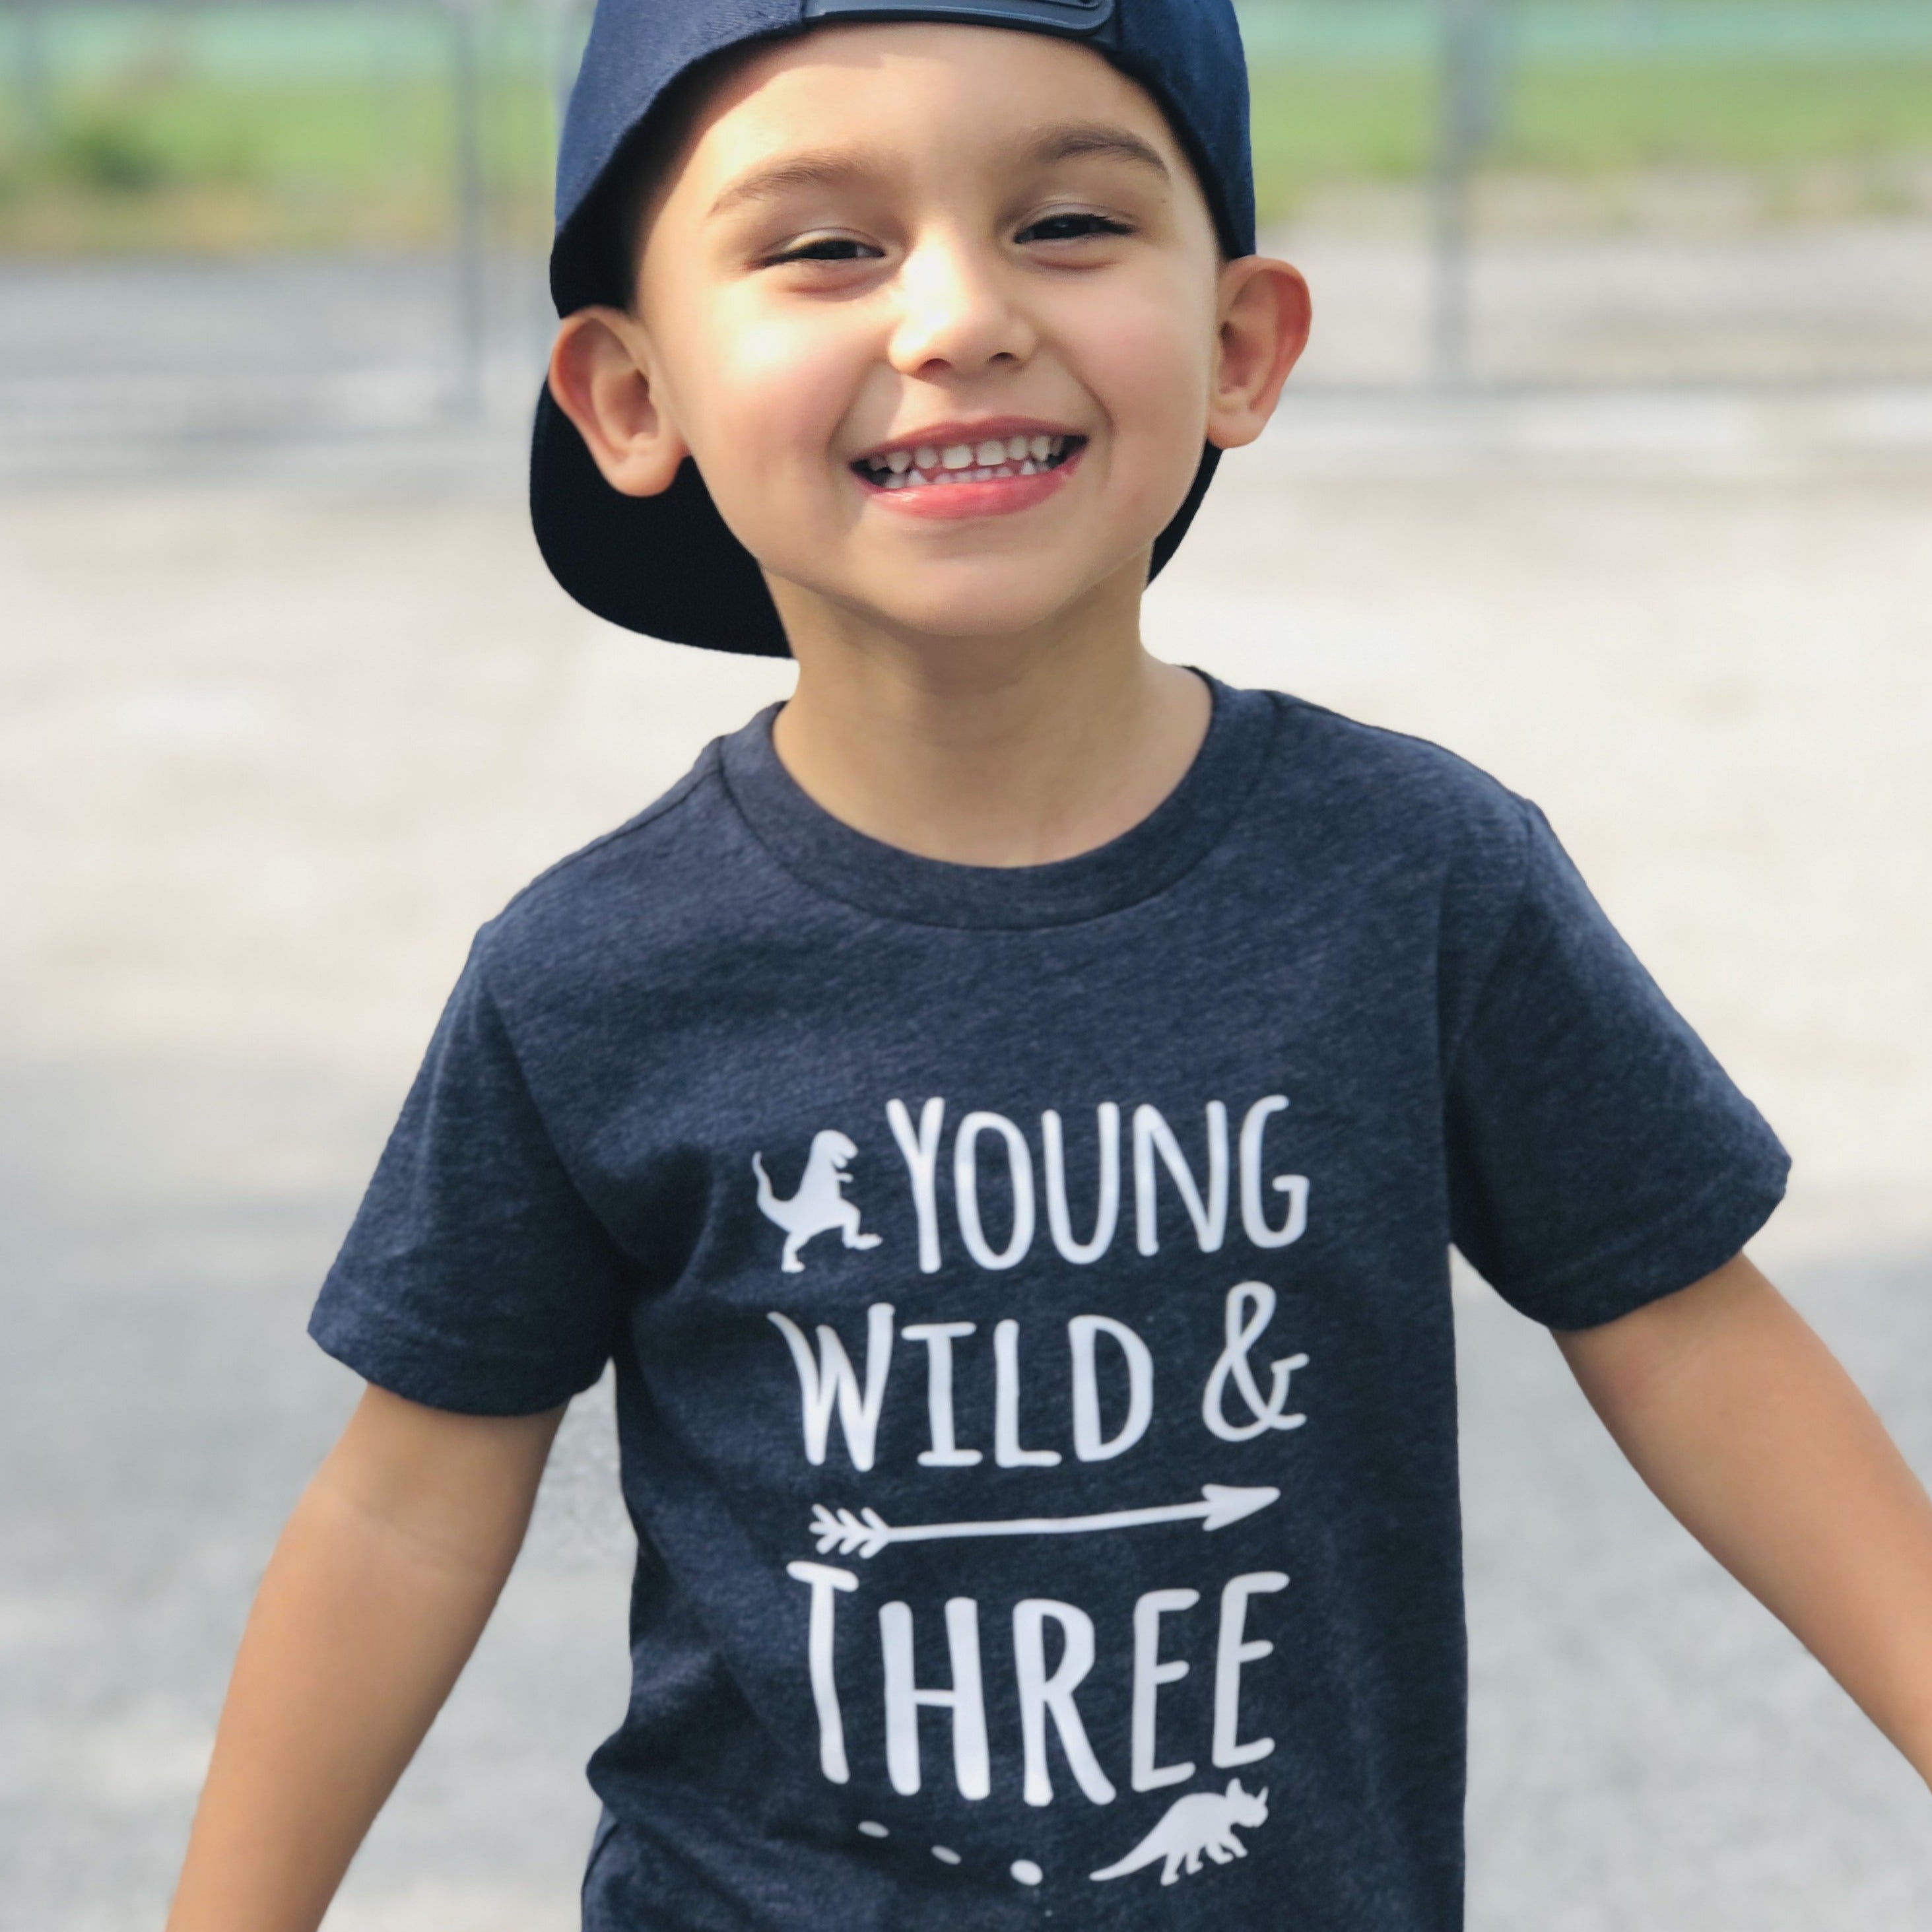 Young Wild & THREE - dinosaur